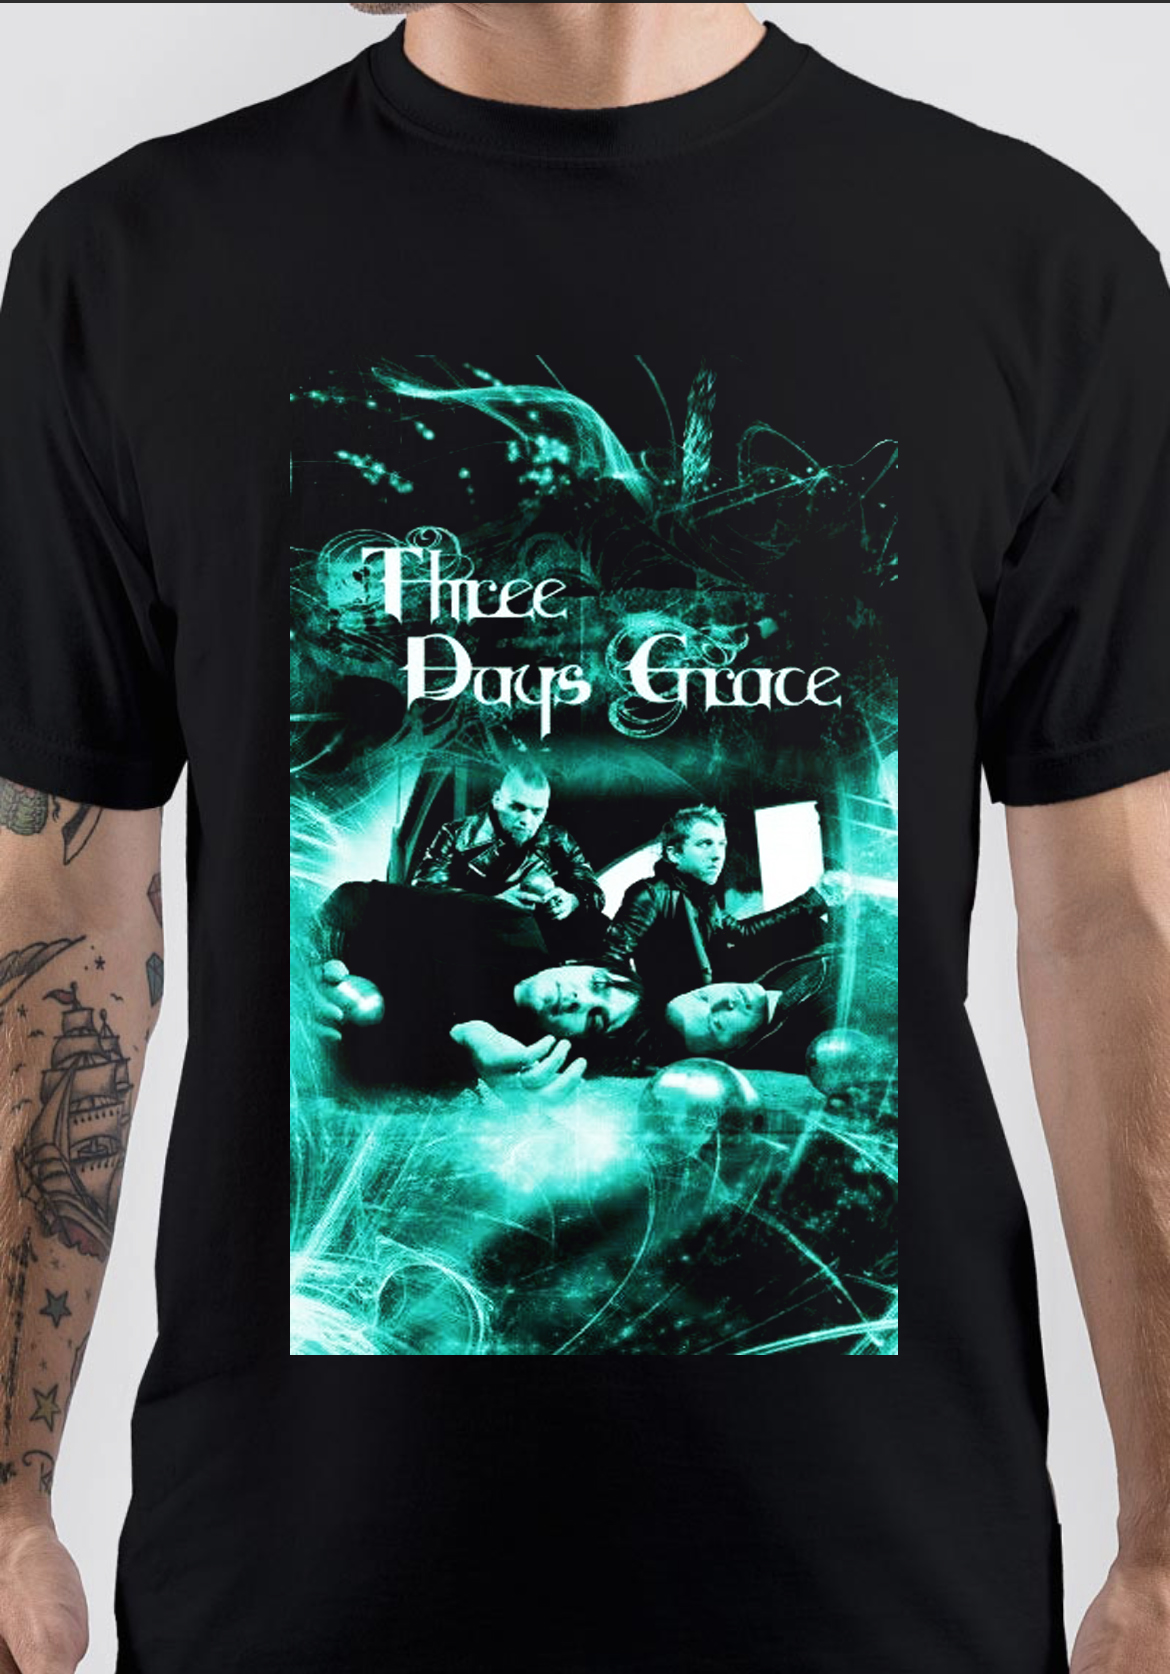 Three Days Grace T-Shirt And Merchandise